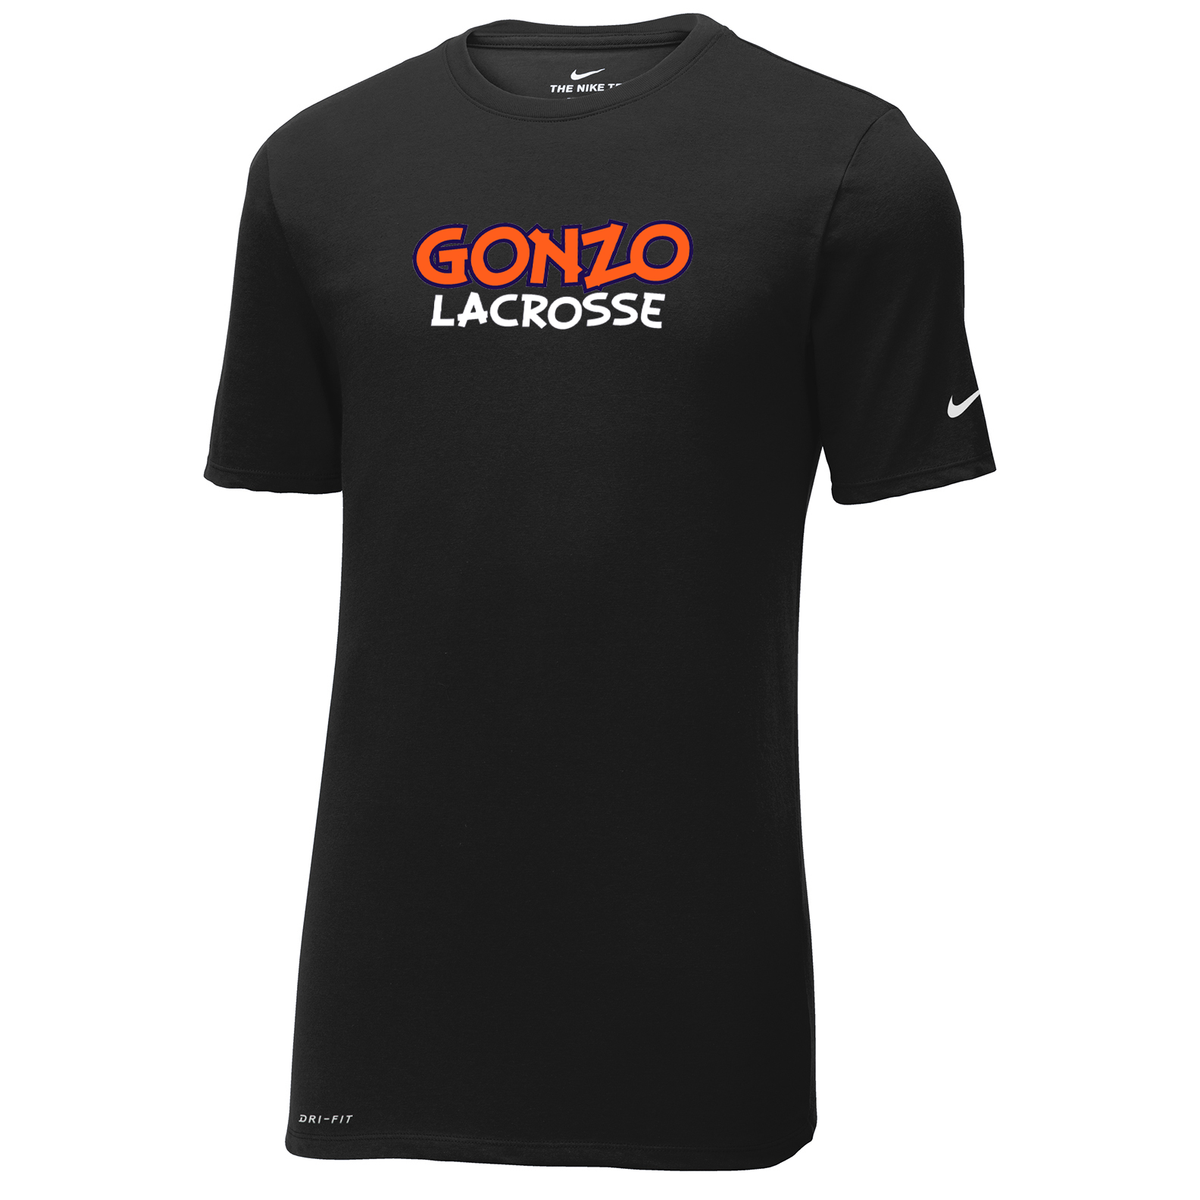 Gonzo Lacrosse Nike Dri-FIT Tee